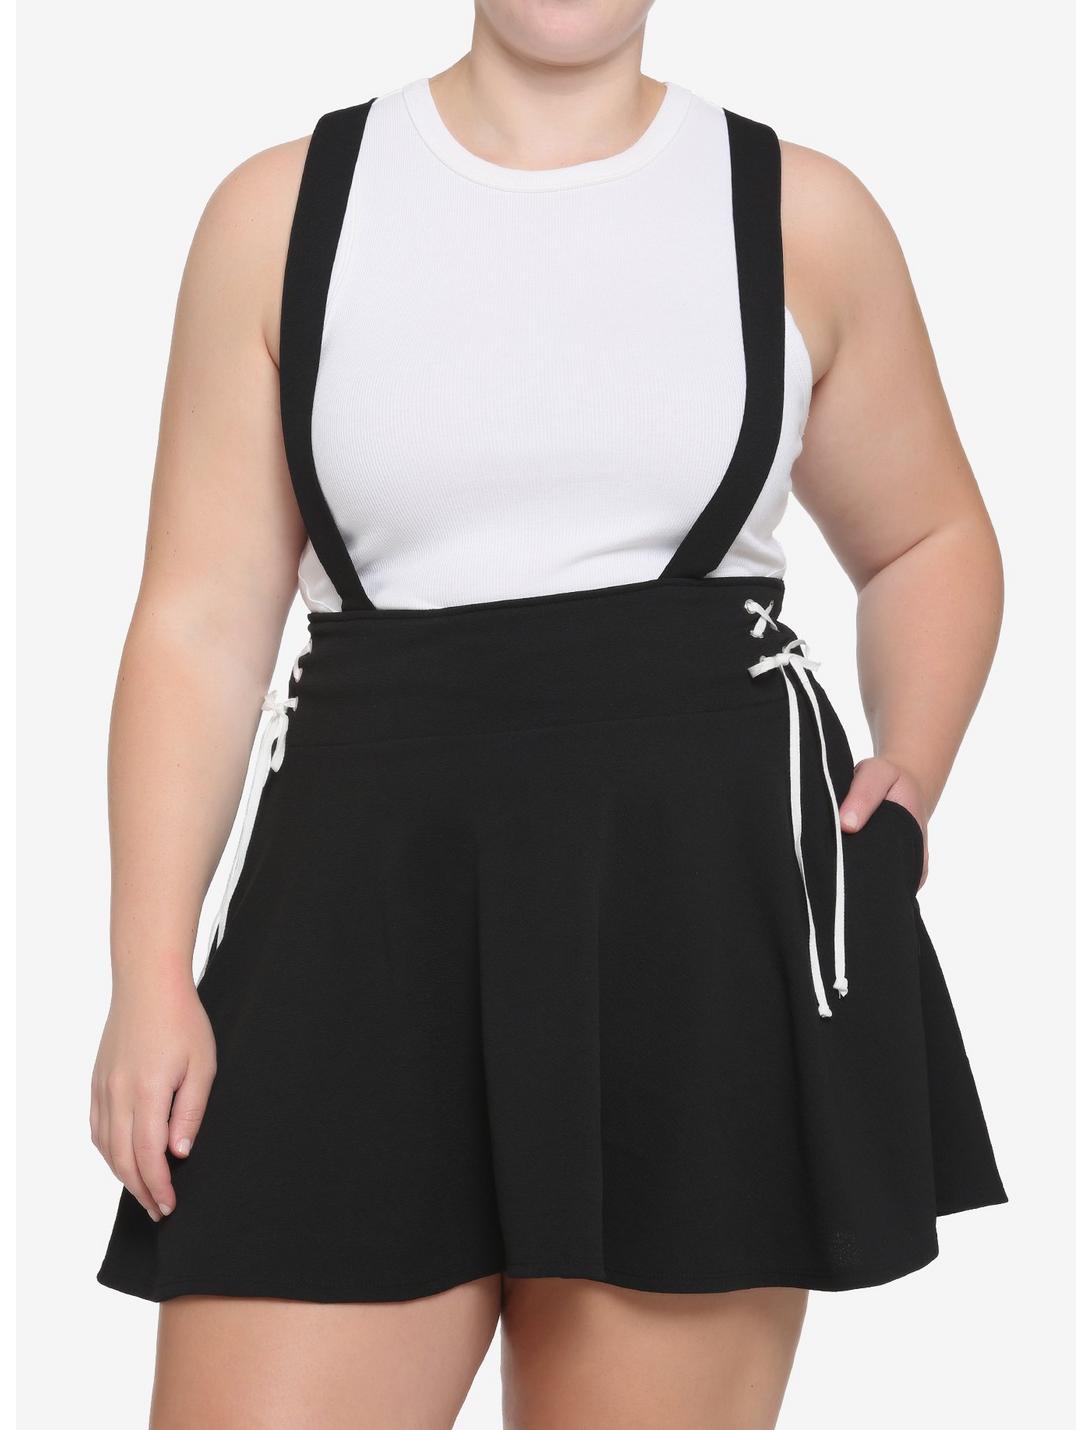 Black & White Lace-Up Suspender Skirt Plus Size, BLACK, hi-res